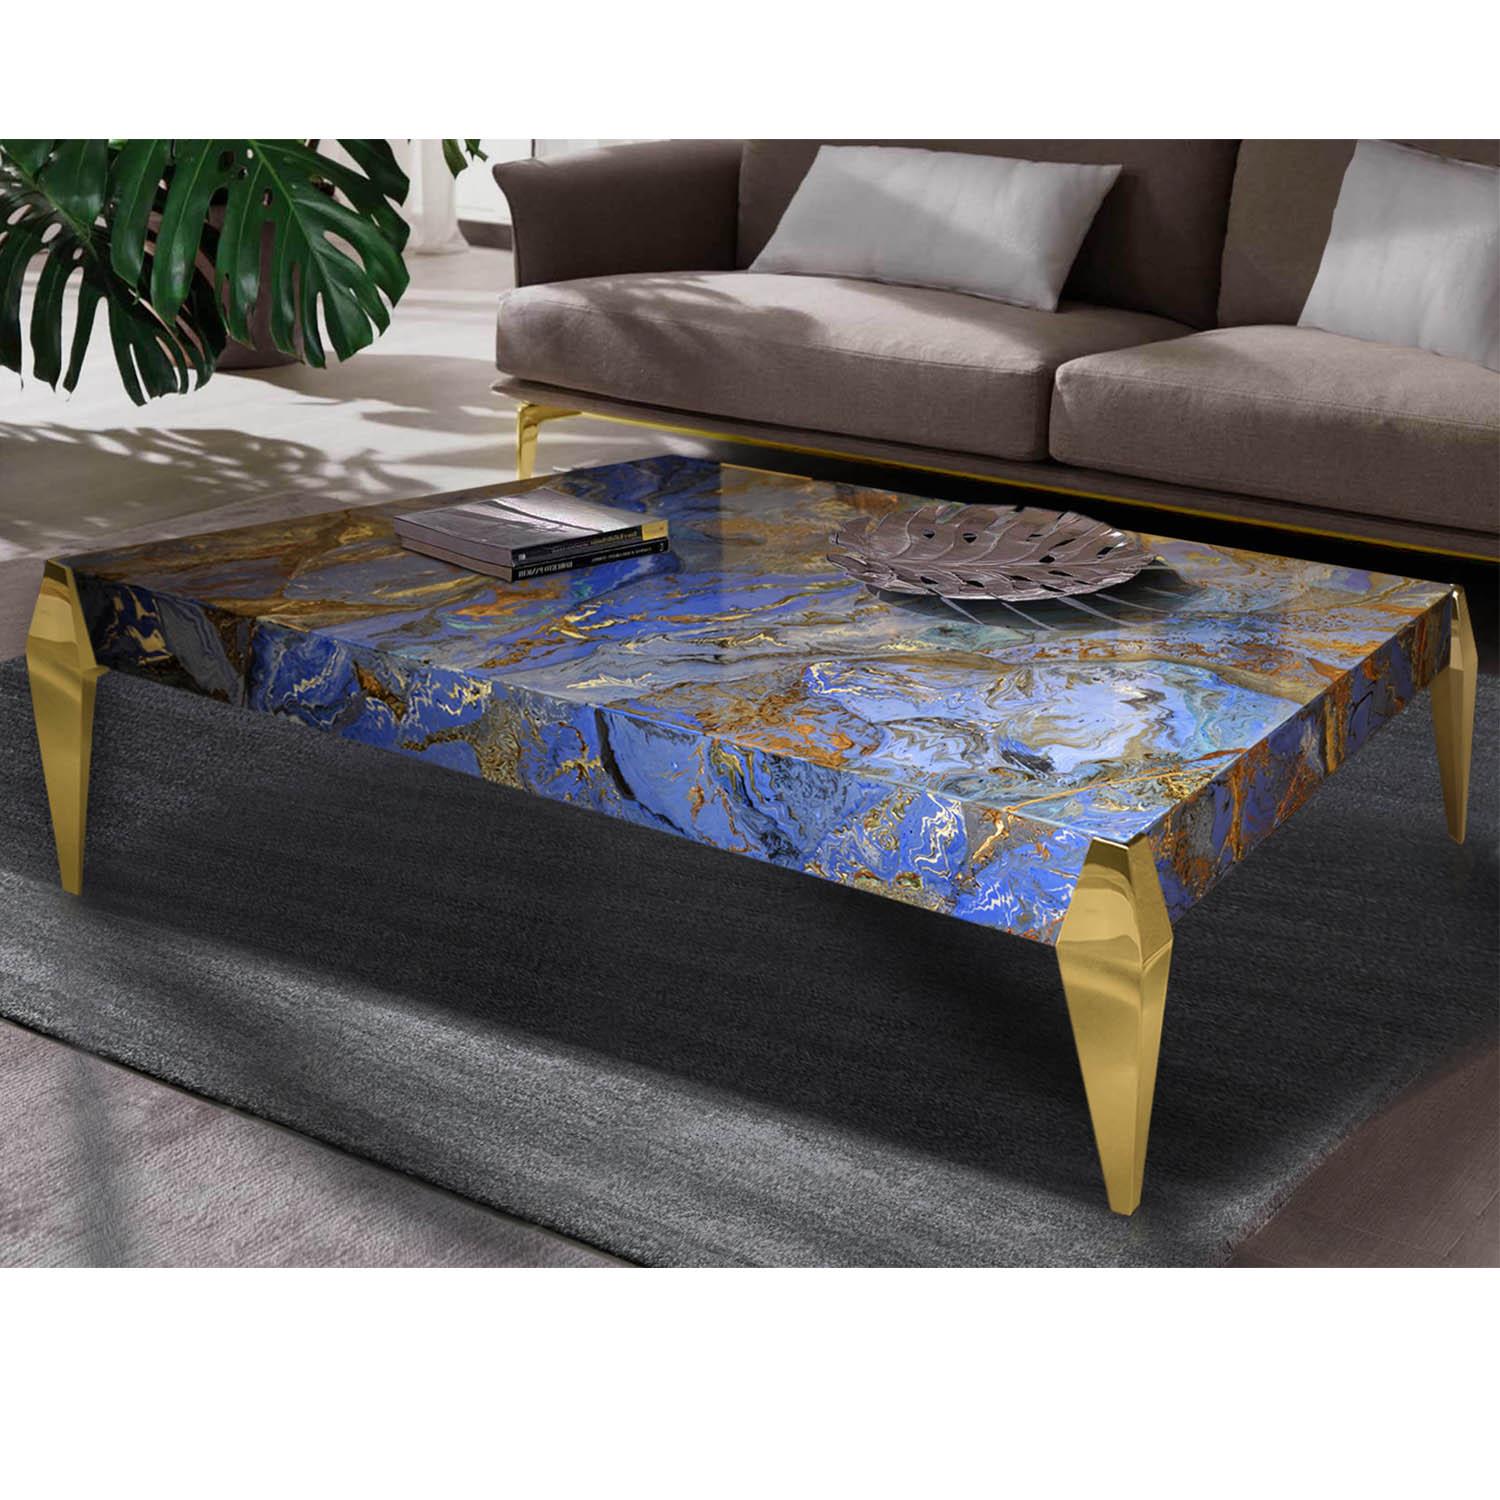 Modern Cobalt  blue Coffee Table  Marbled Scagliola Decoration Gold Leaf Wooden Base